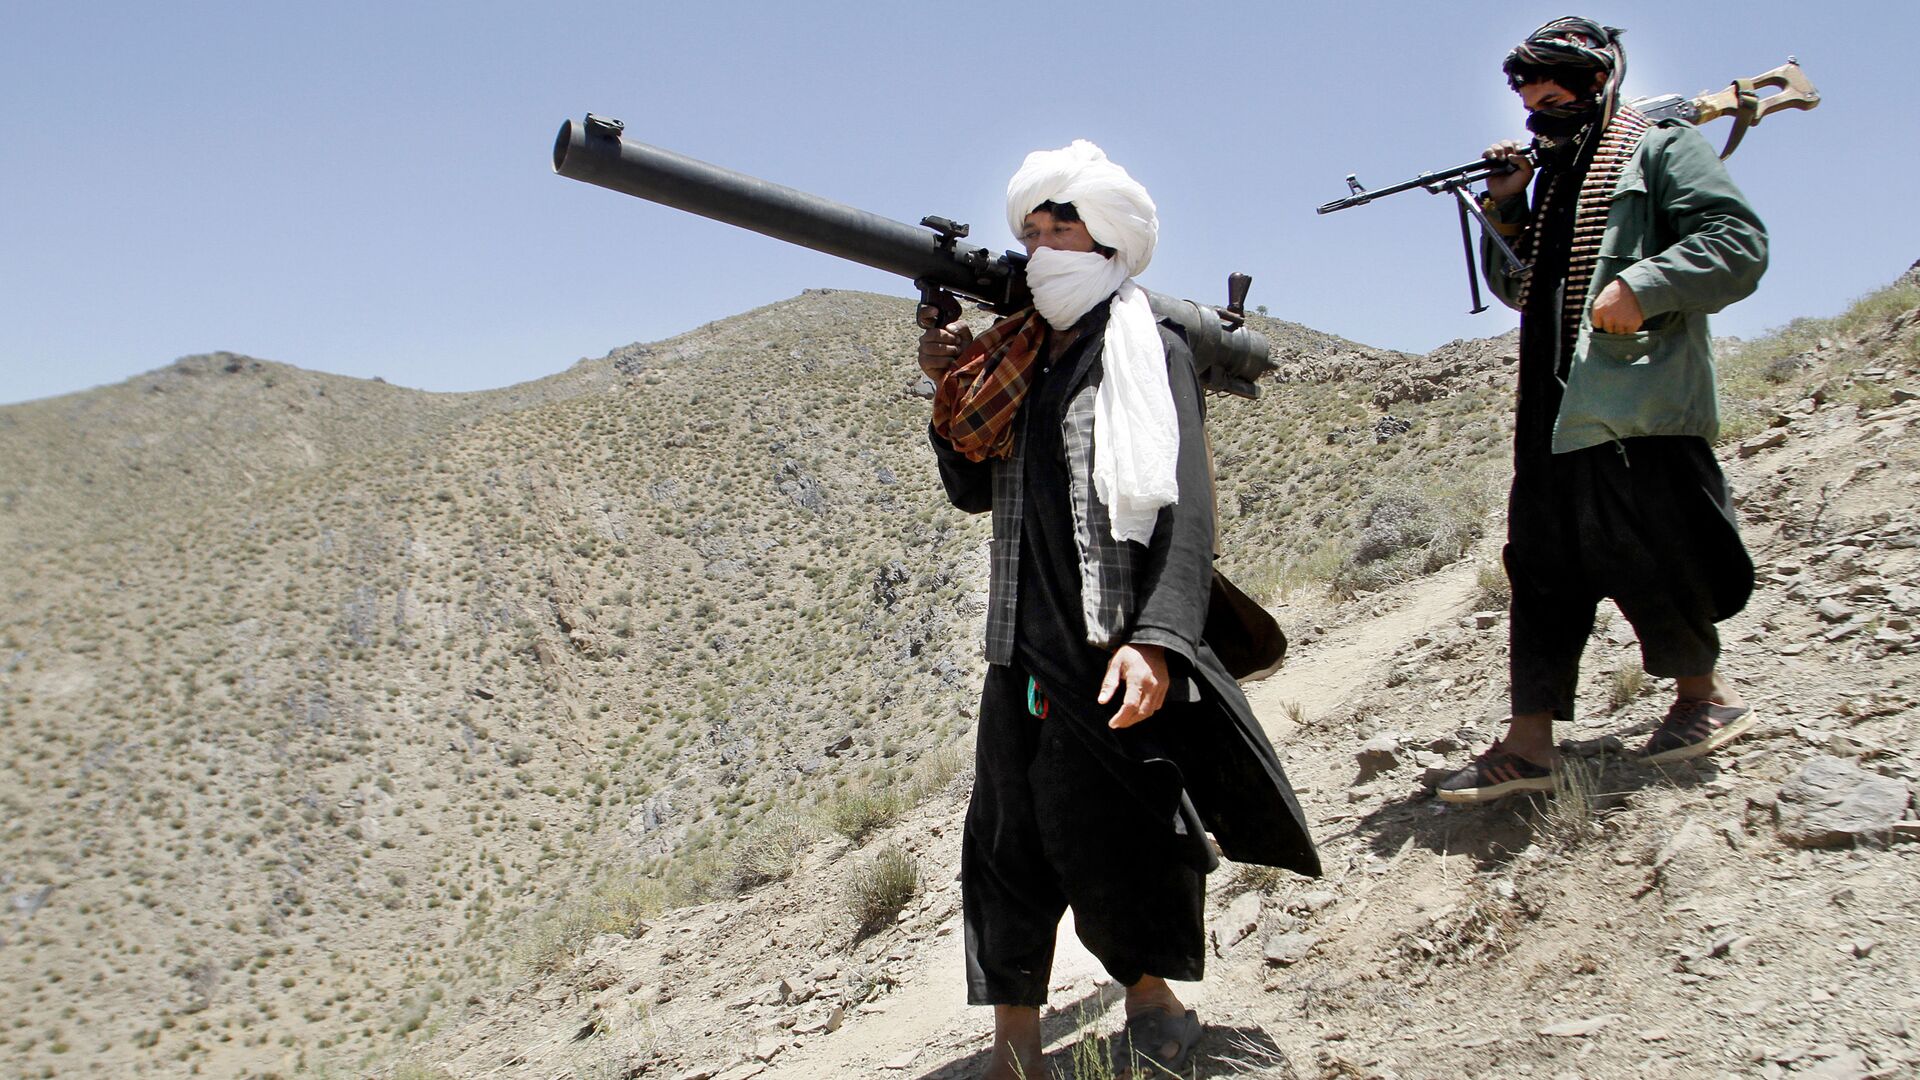 Члены террористического движения Талибан в Афганистане - Sputnik Таджикистан, 1920, 06.09.2021